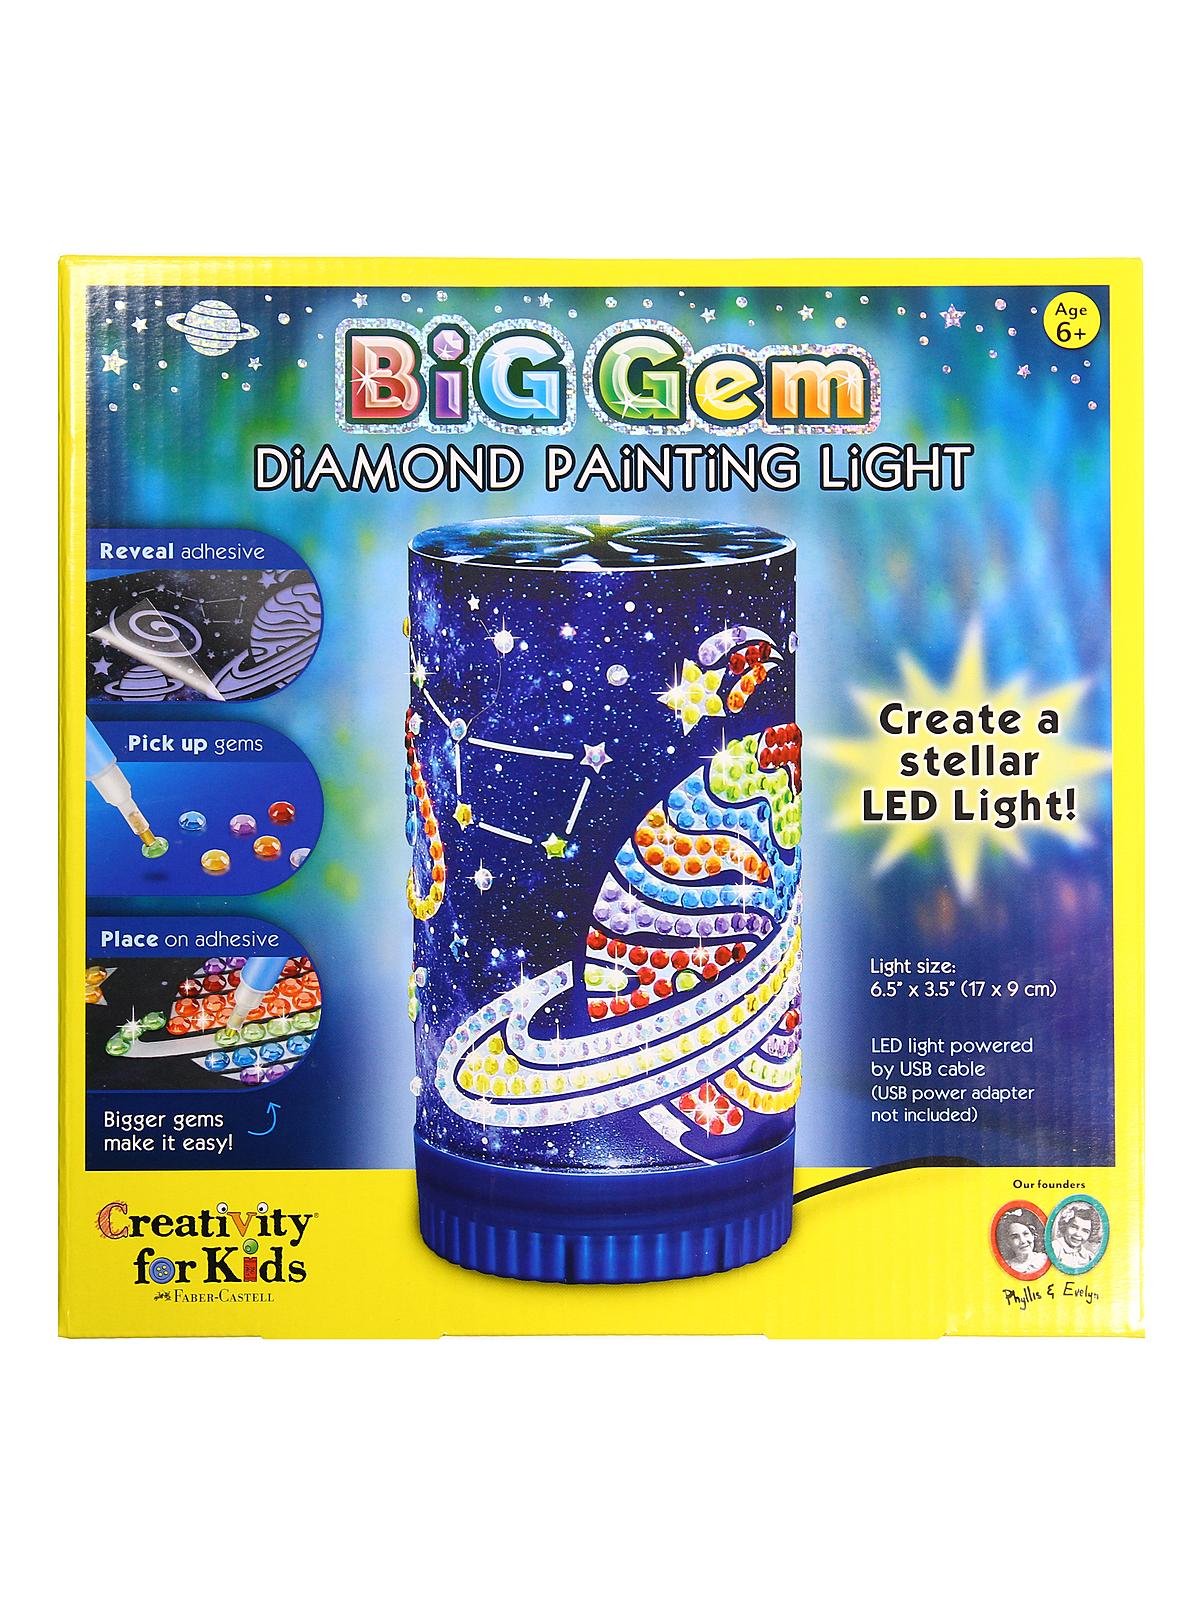 Creativity For Kids - Big Gem Diamond Painting Light